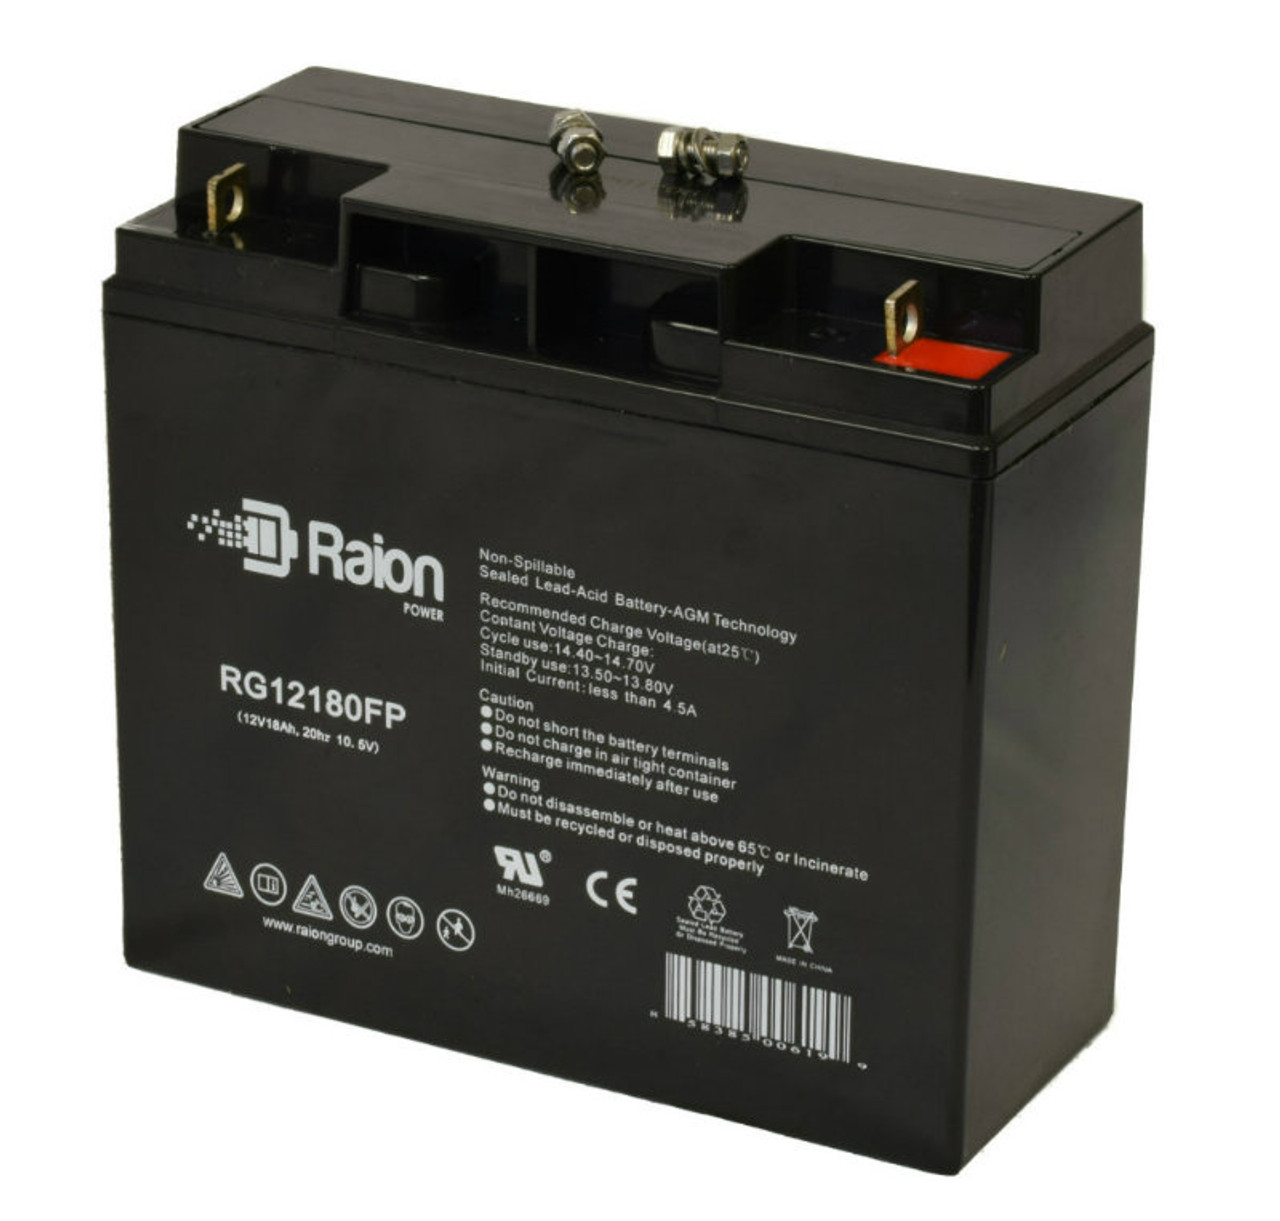 Raion Power RG12180FP 12V 18Ah Lead Acid Battery for Wagan Tech 7561 Power Dome Plex